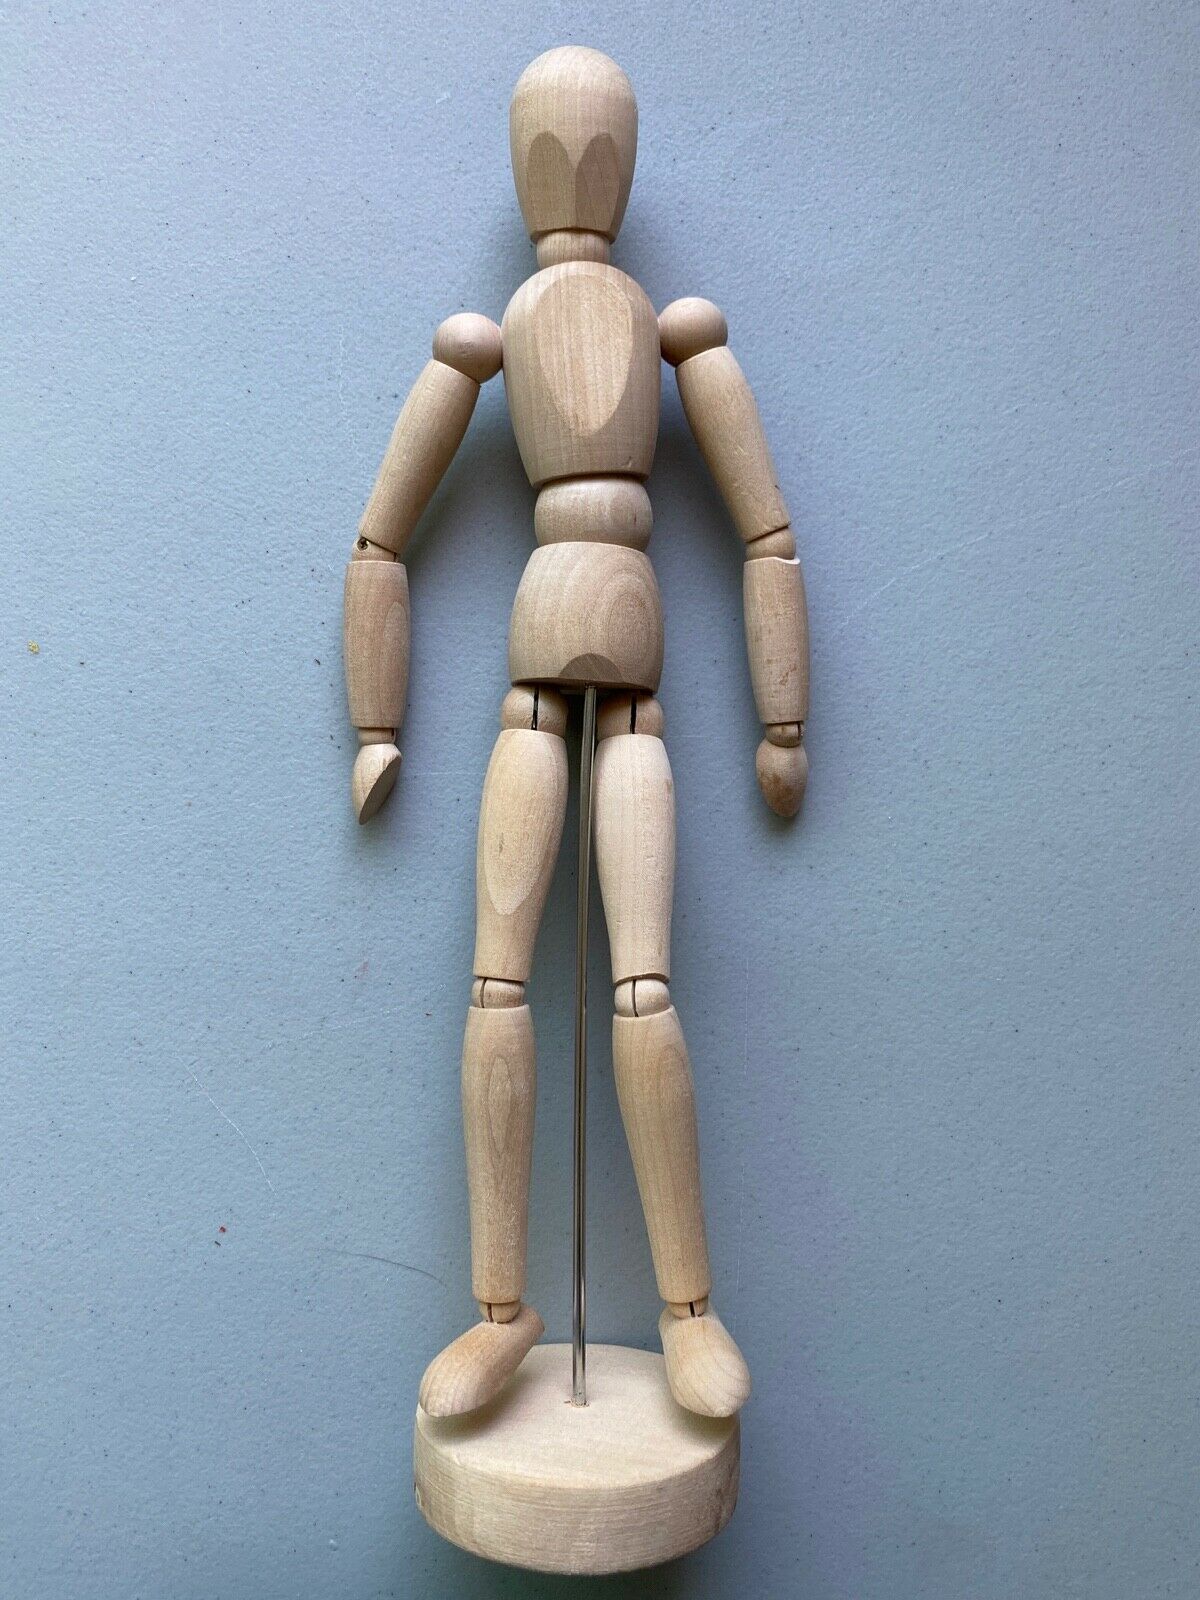 Ikea Mannequin Wood Figure Gestalta Artist Posable Toy Drawing Sketch #21576 13"